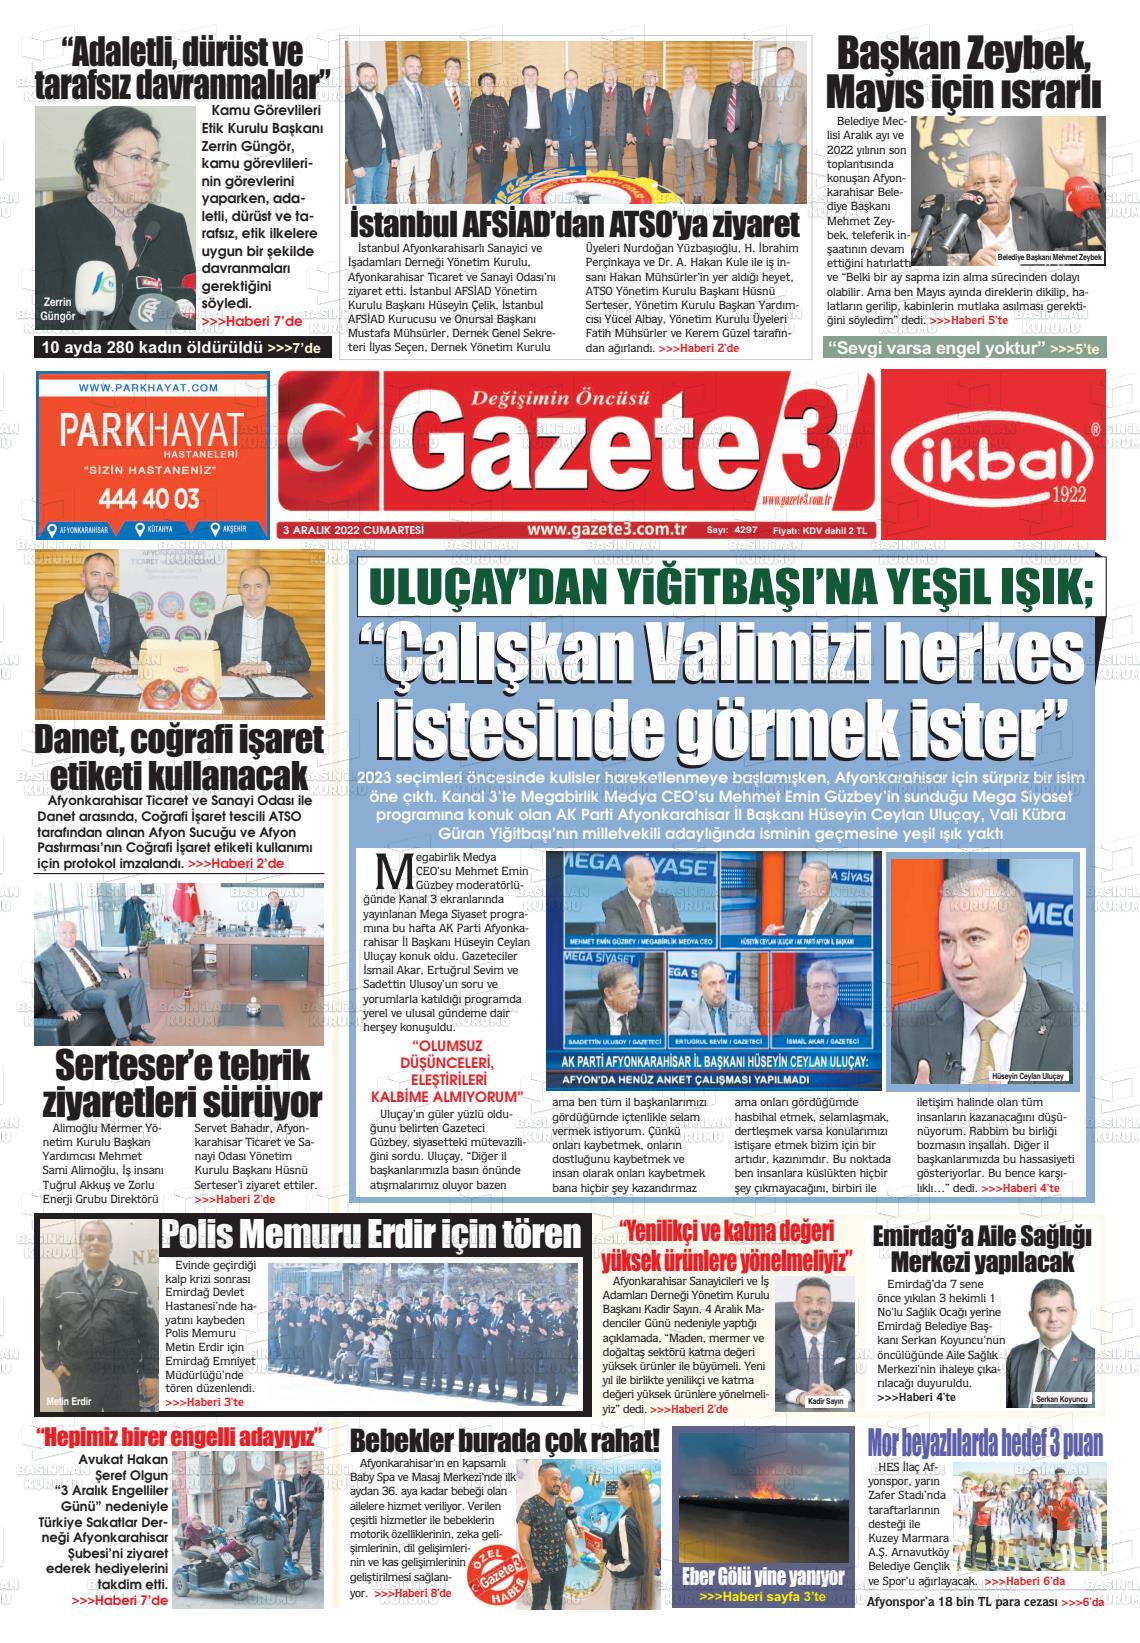 03 Aralık 2022 Gazete 3 Gazete Manşeti